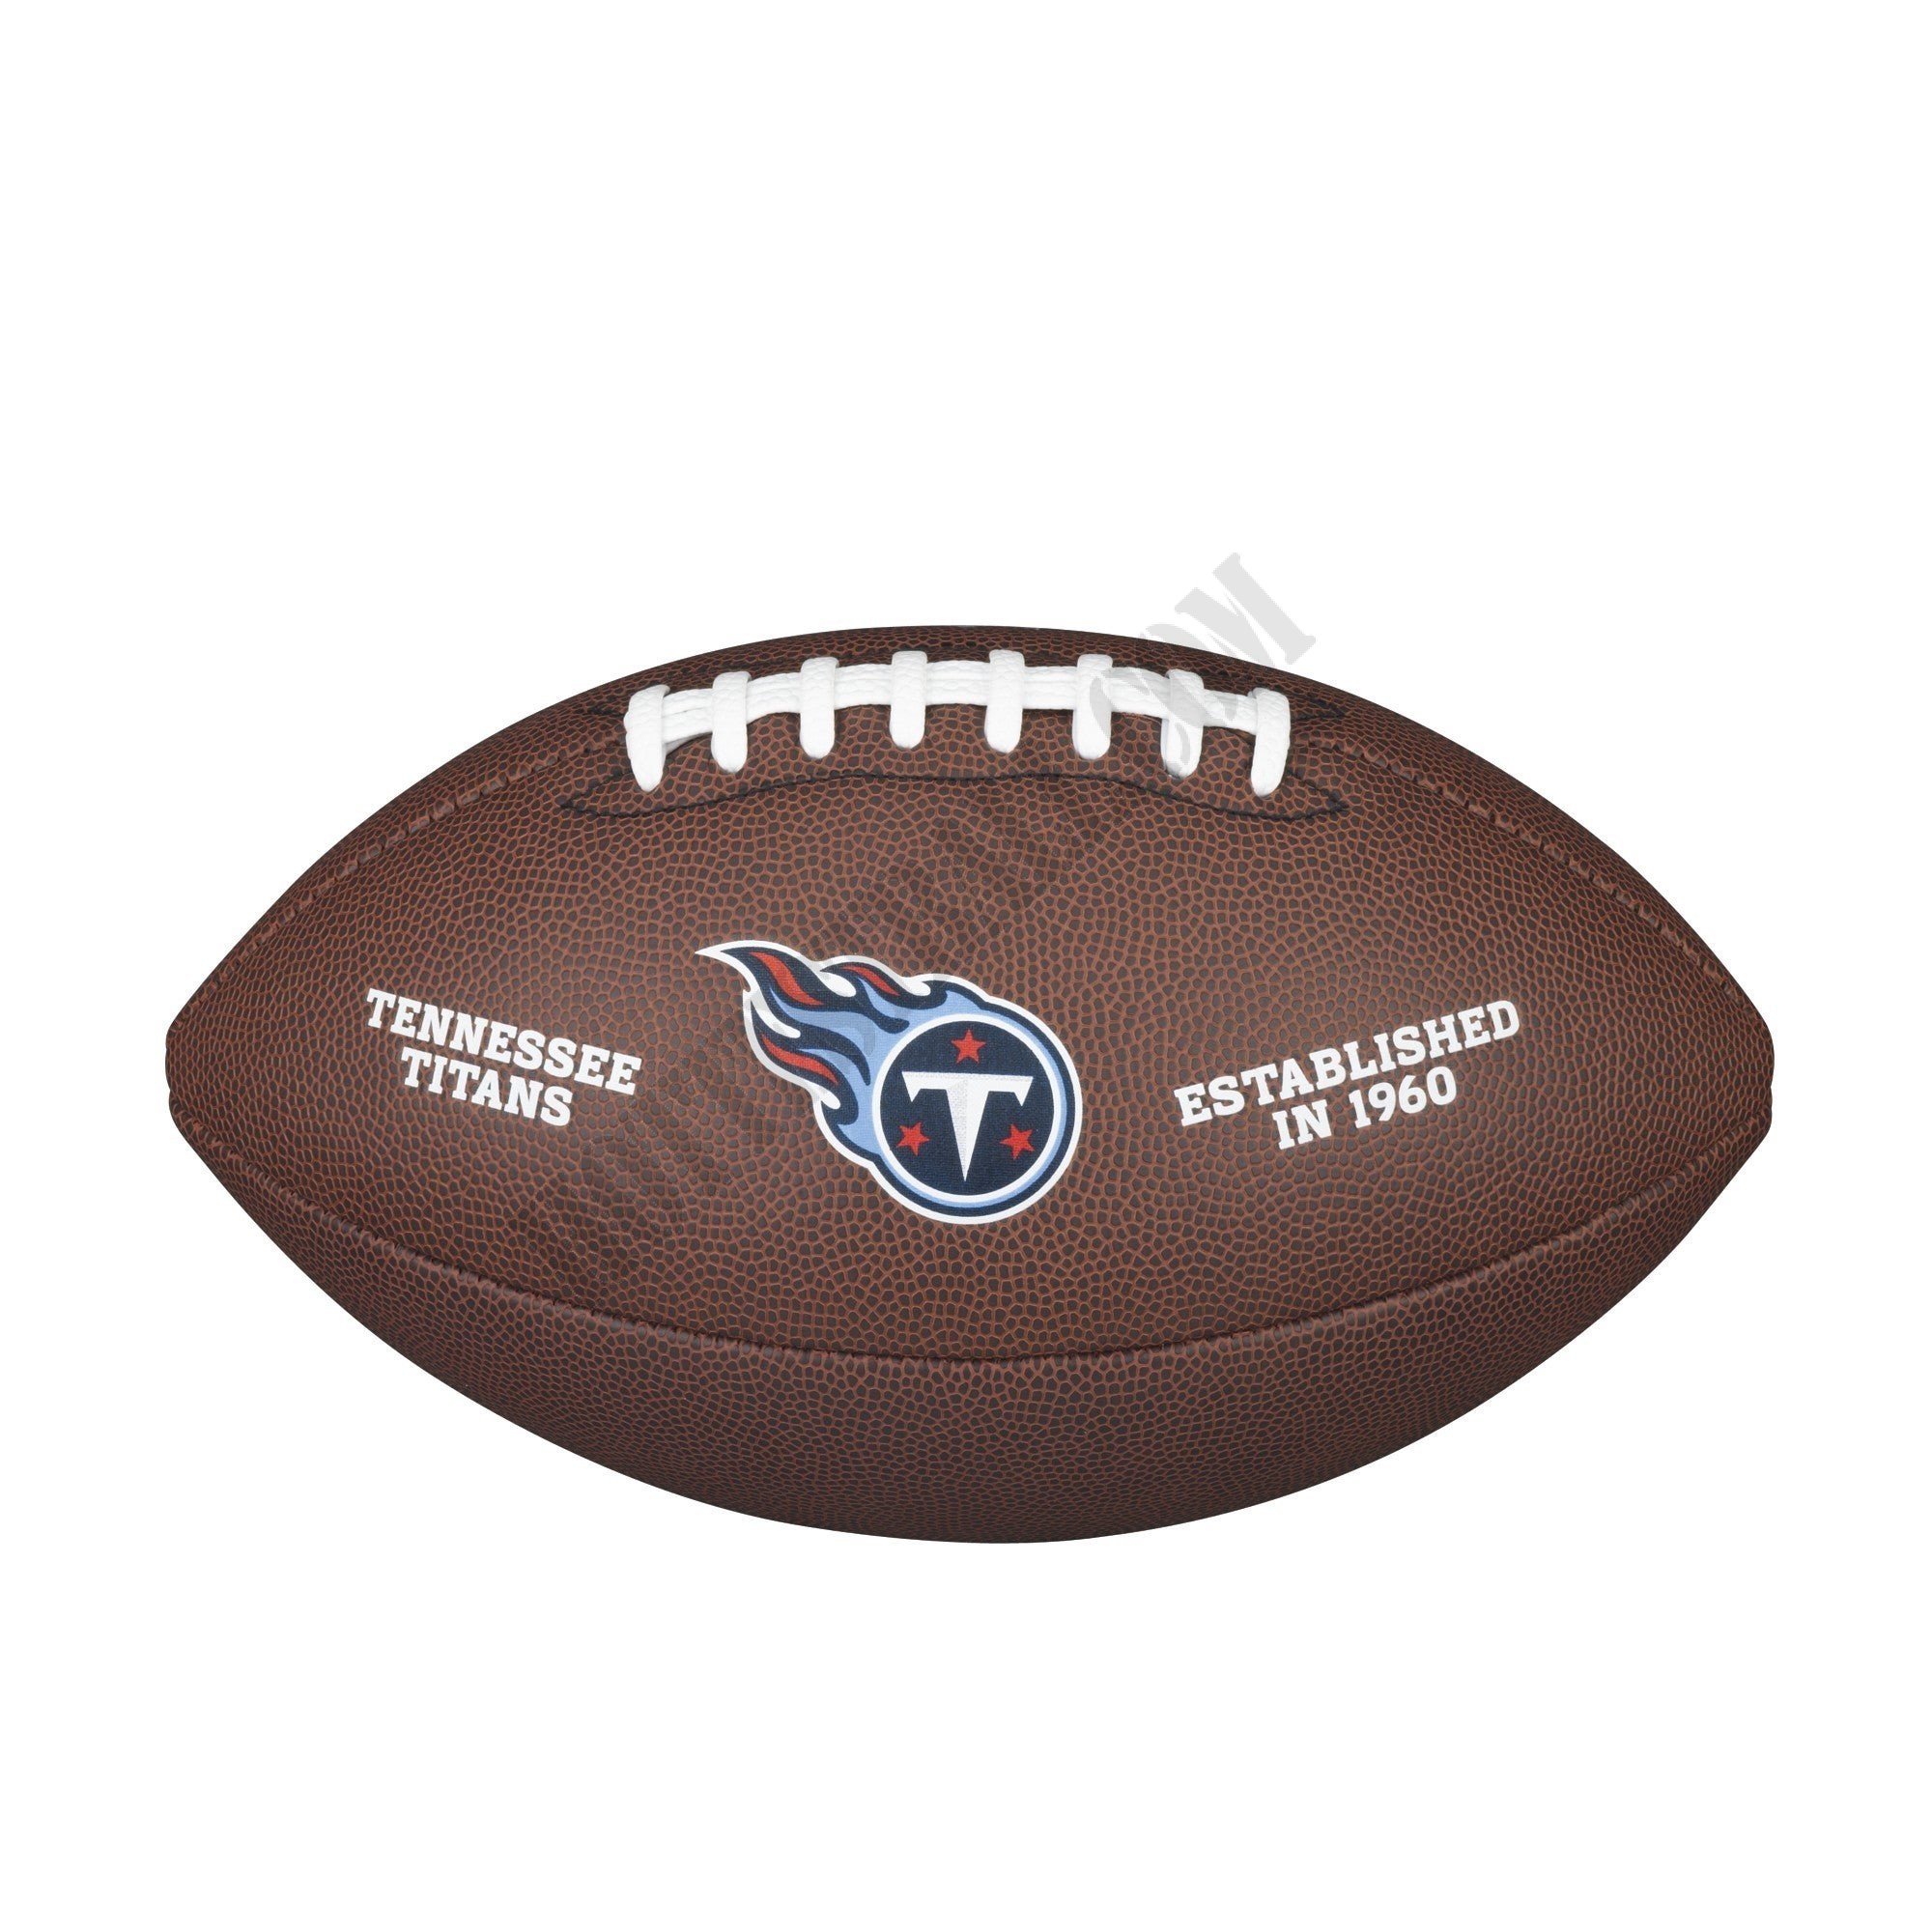 NFL Backyard Legend Football - Tennessee Titans ● Wilson Promotions - NFL Backyard Legend Football - Tennessee Titans ● Wilson Promotions